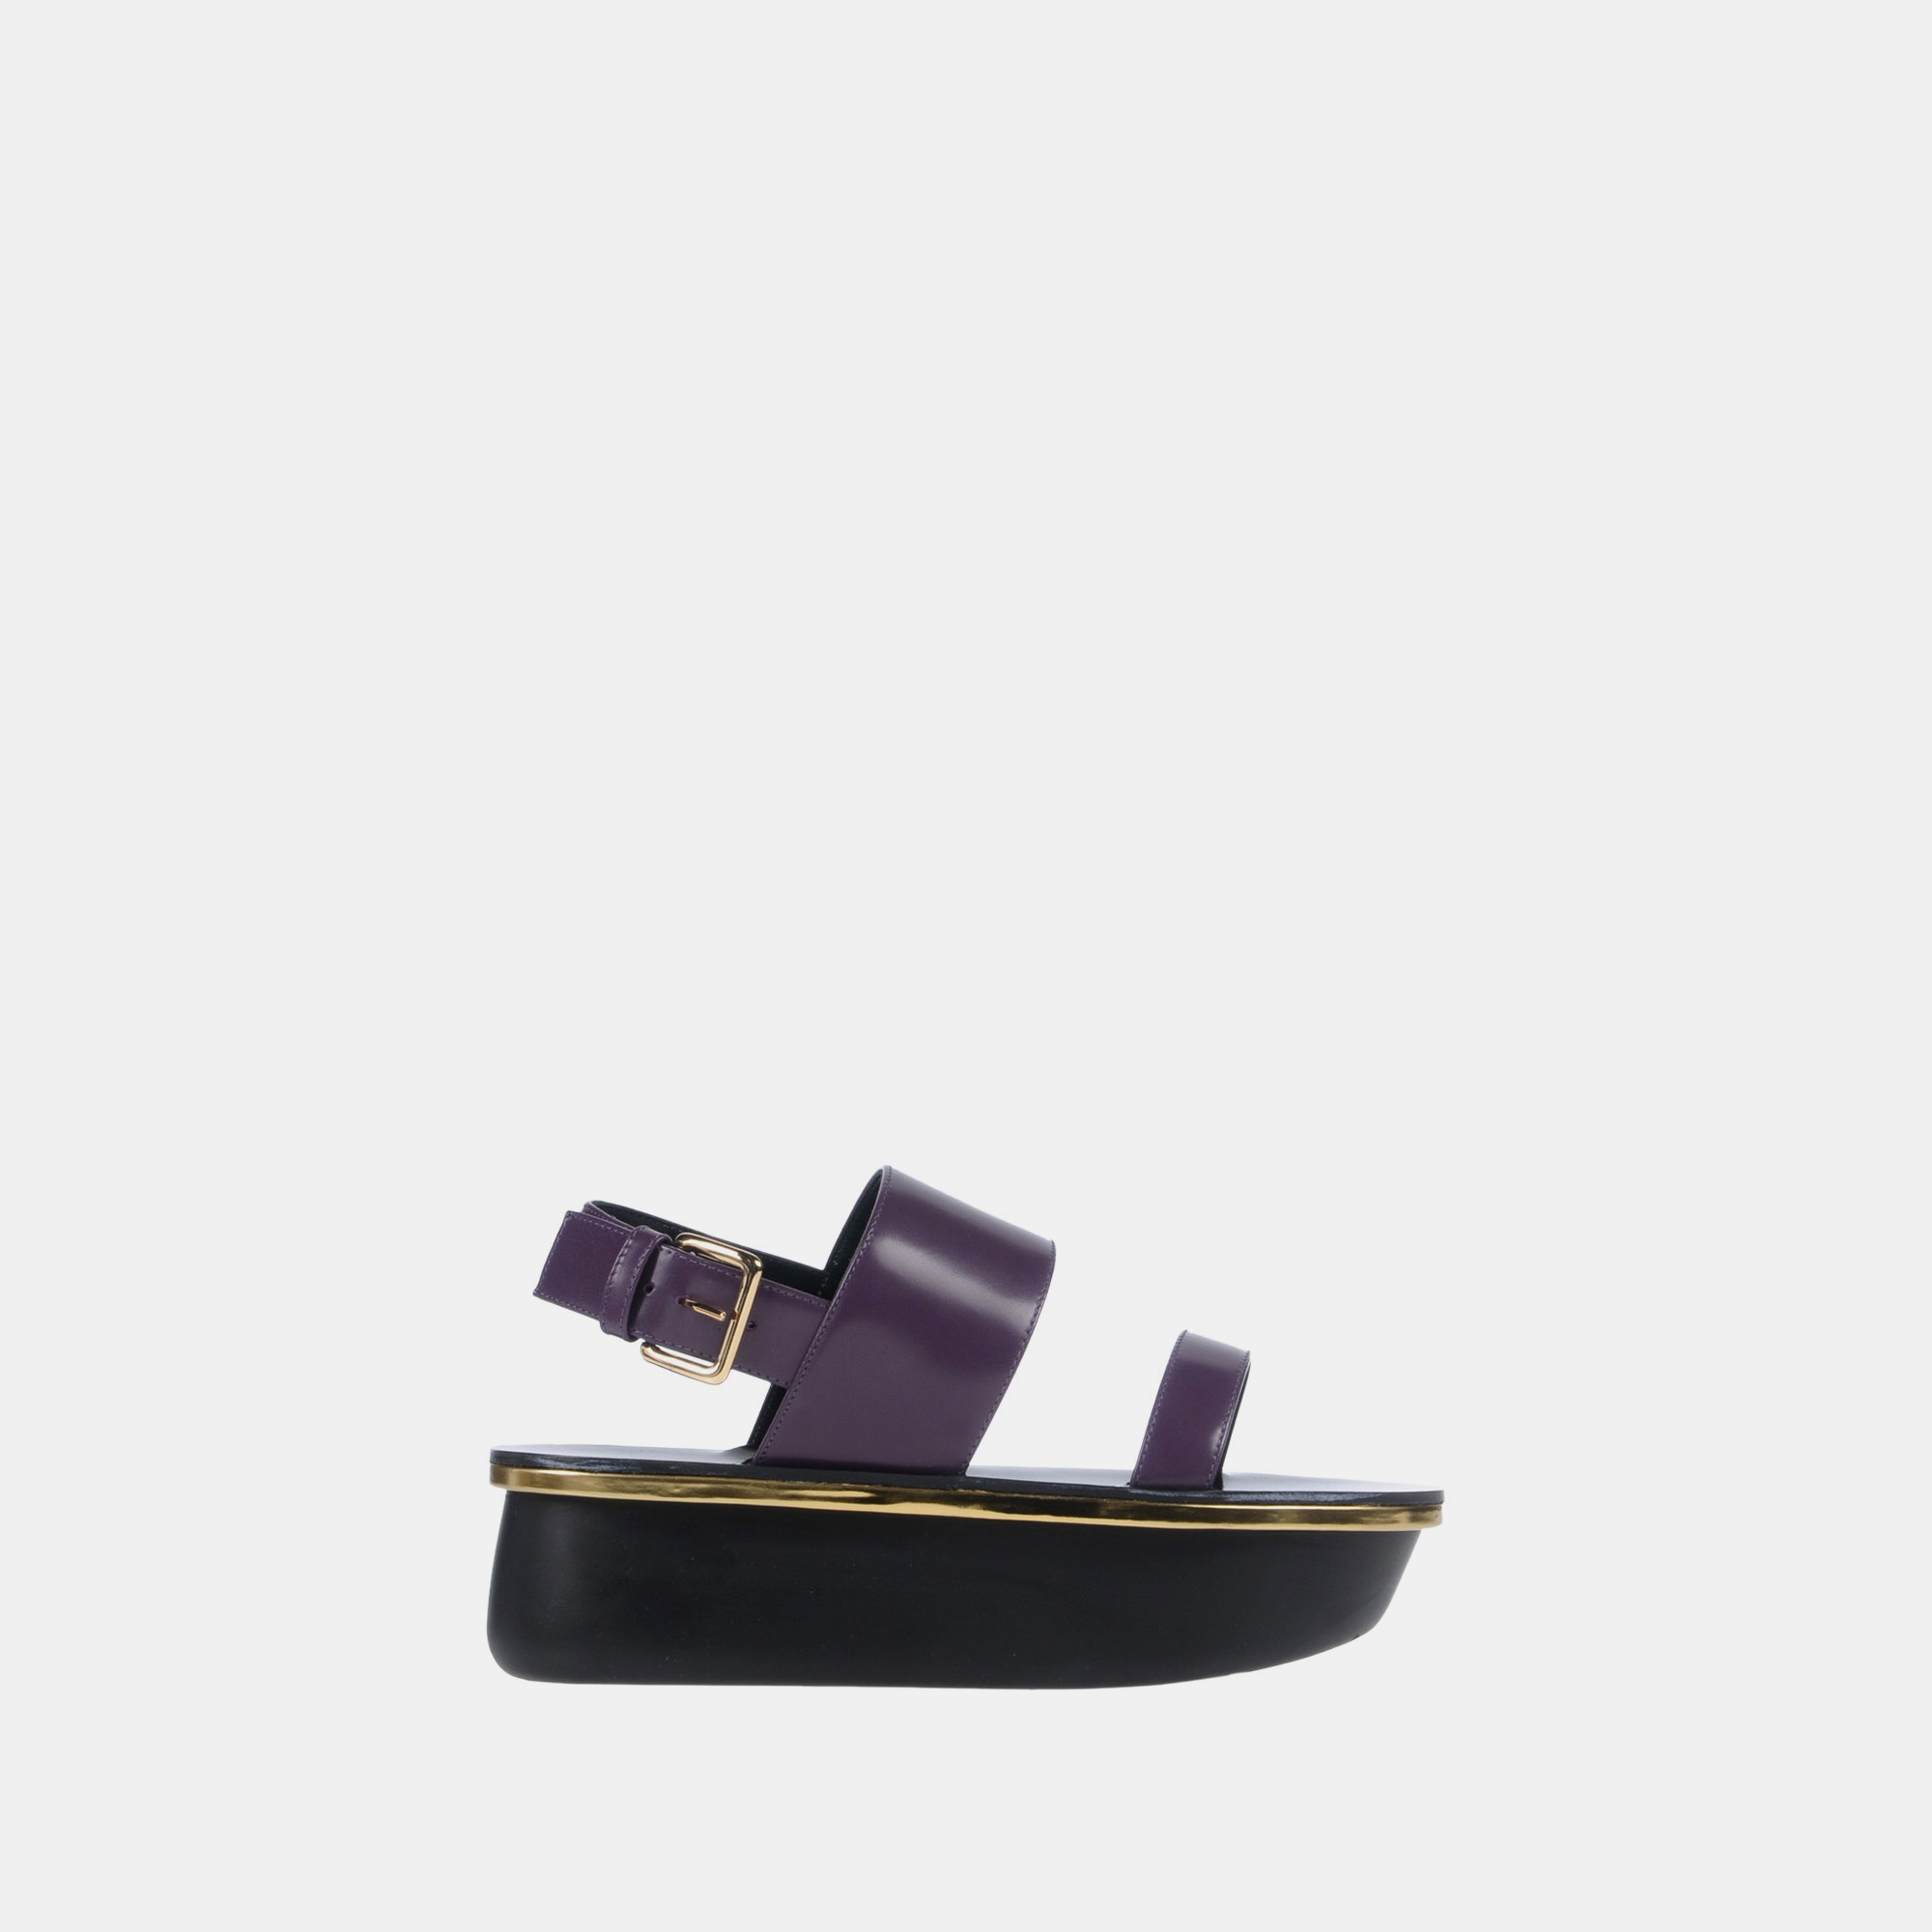 Marni purple leather platform sandals 36